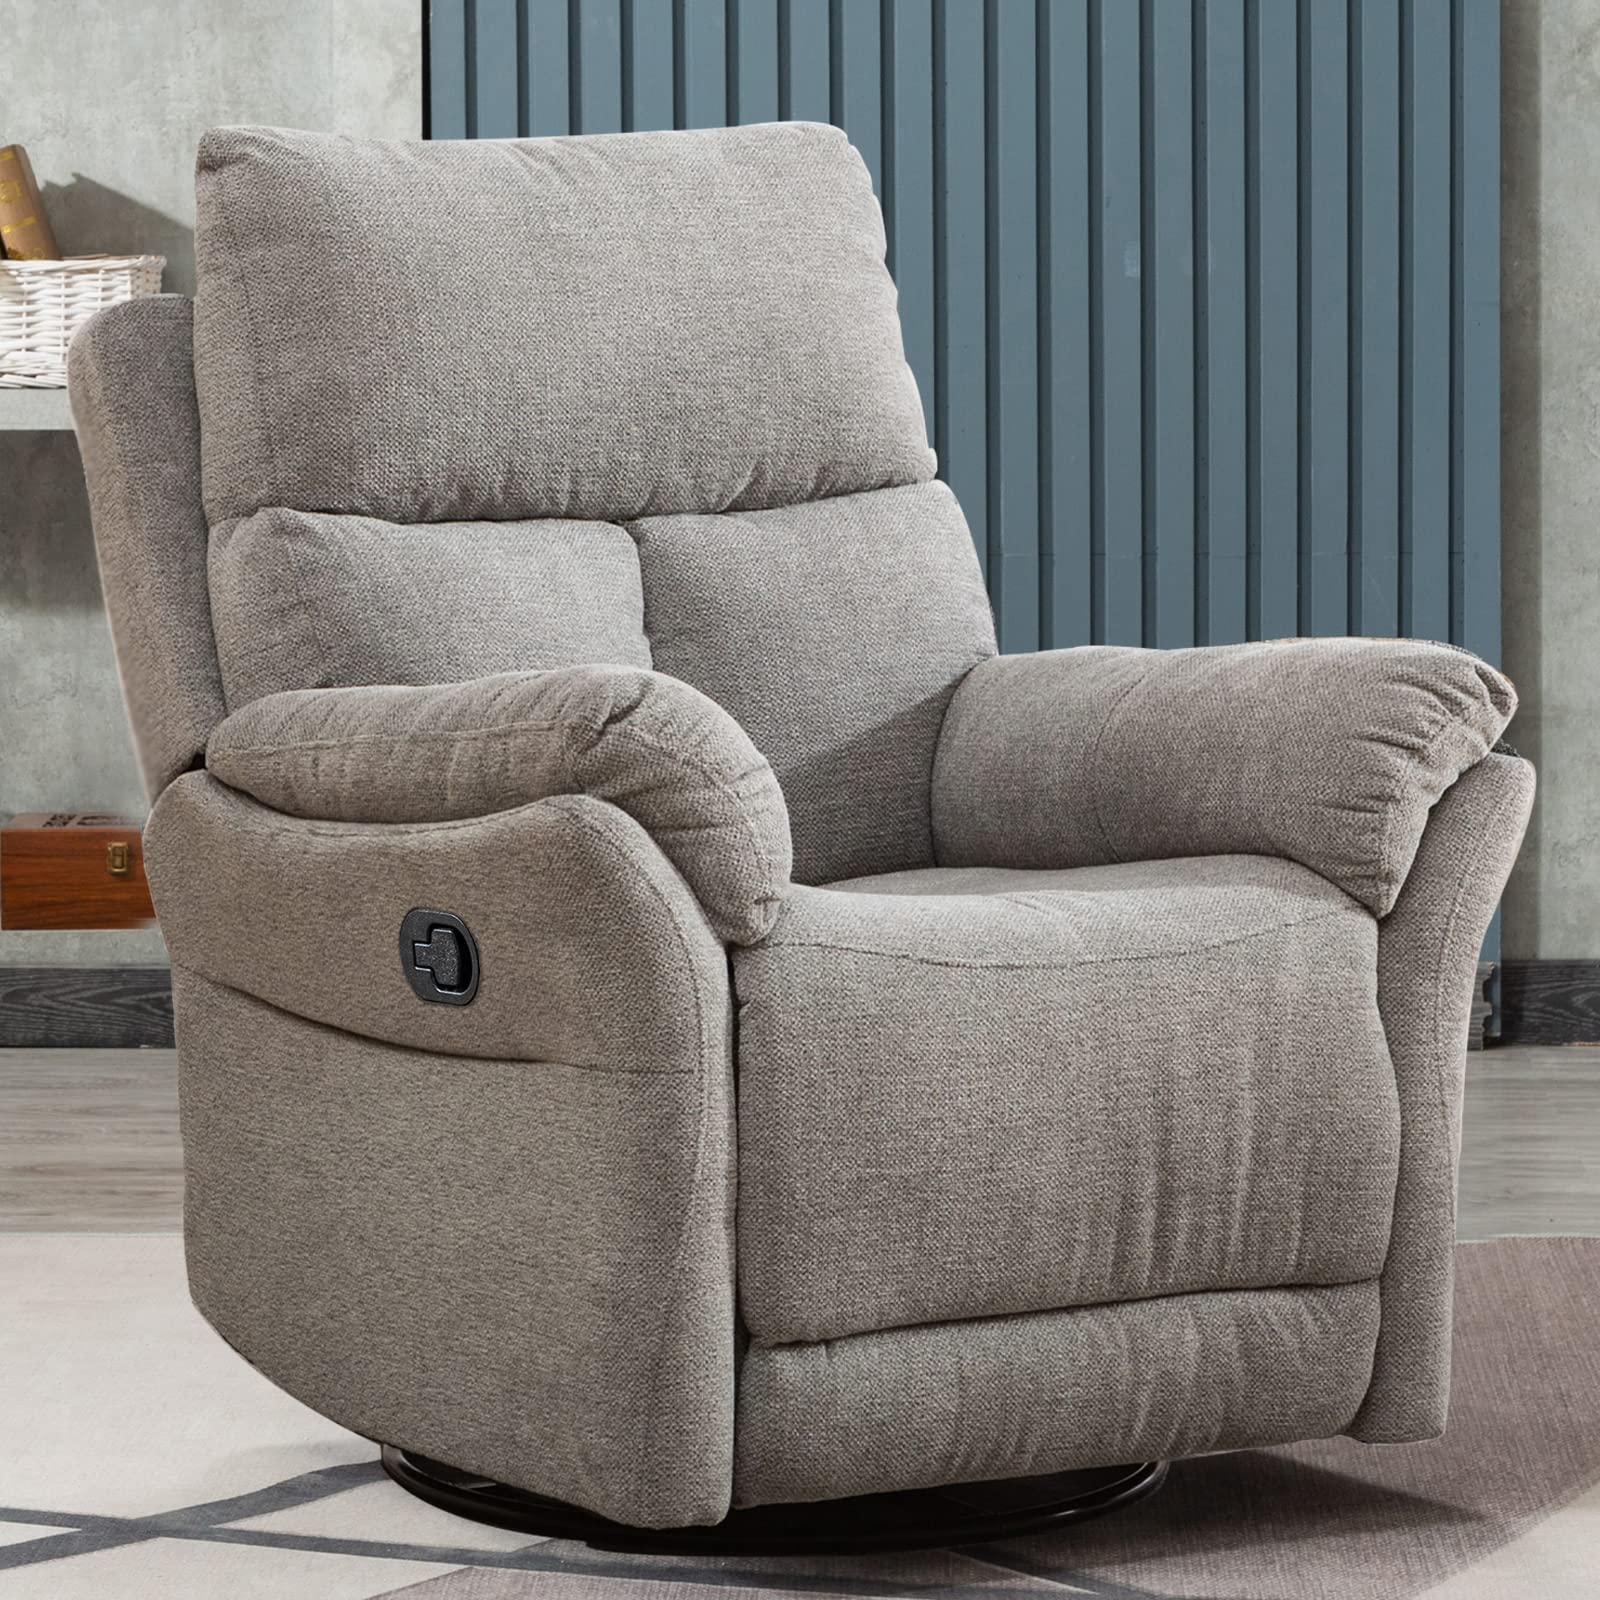 ANJ HOME ANJ Swivel Rocker Fabric Recliner chair - Reclining chair Manual, Single Modern Sofa Home Theater Seating for Living Room (Silve